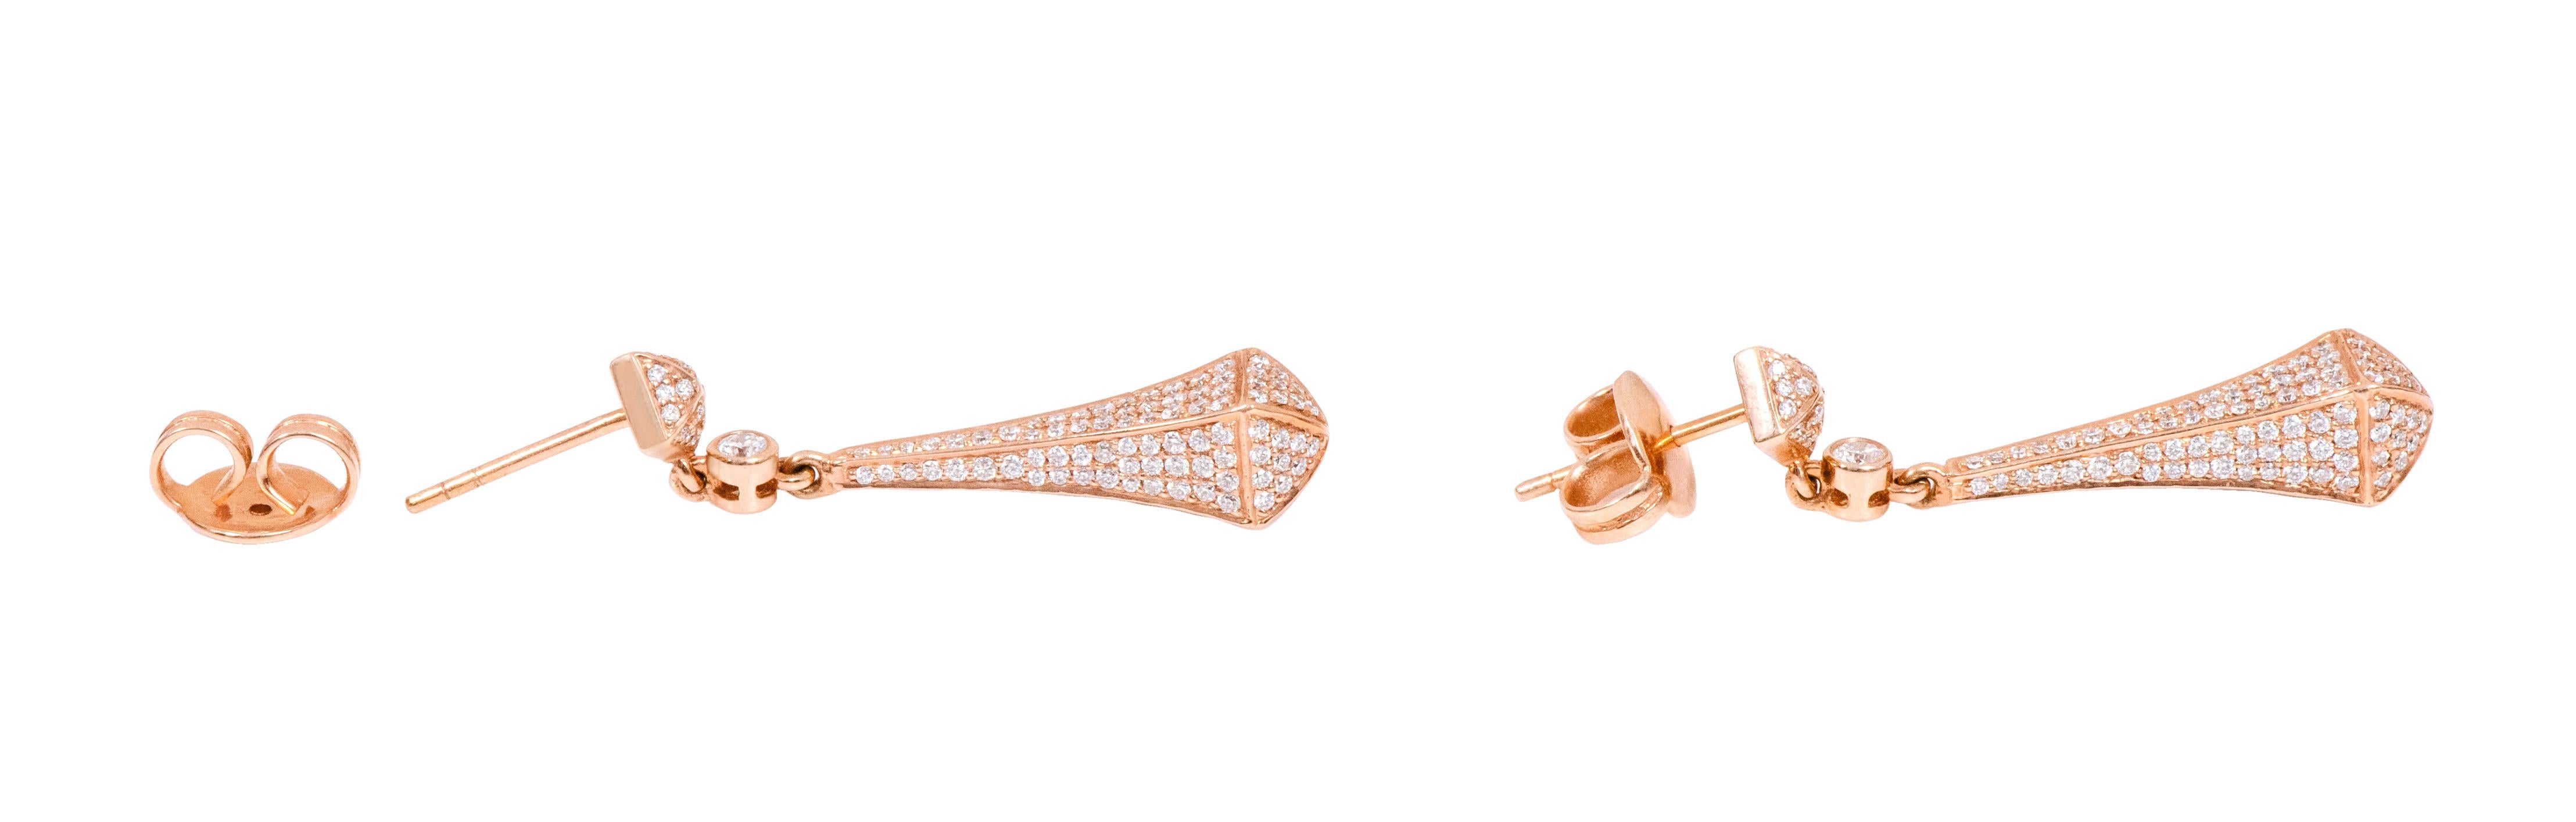 Brilliant Cut 18 Karat Rose Gold 1.73 Carat Diamond Drop Earrings For Sale